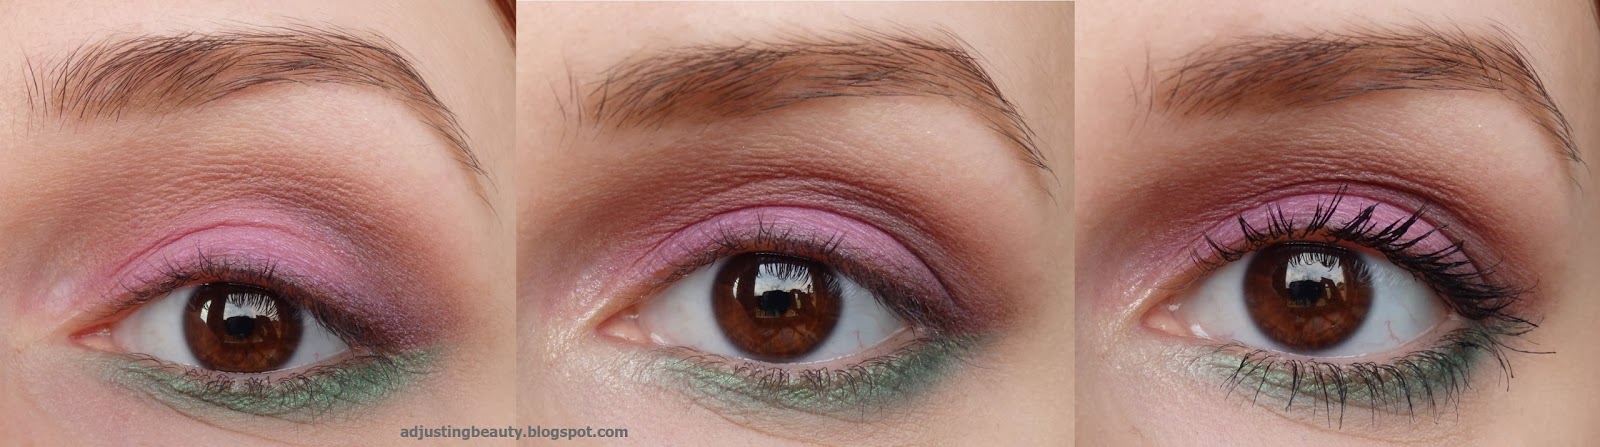 Green and purple eye makeup - Adjusting Beauty